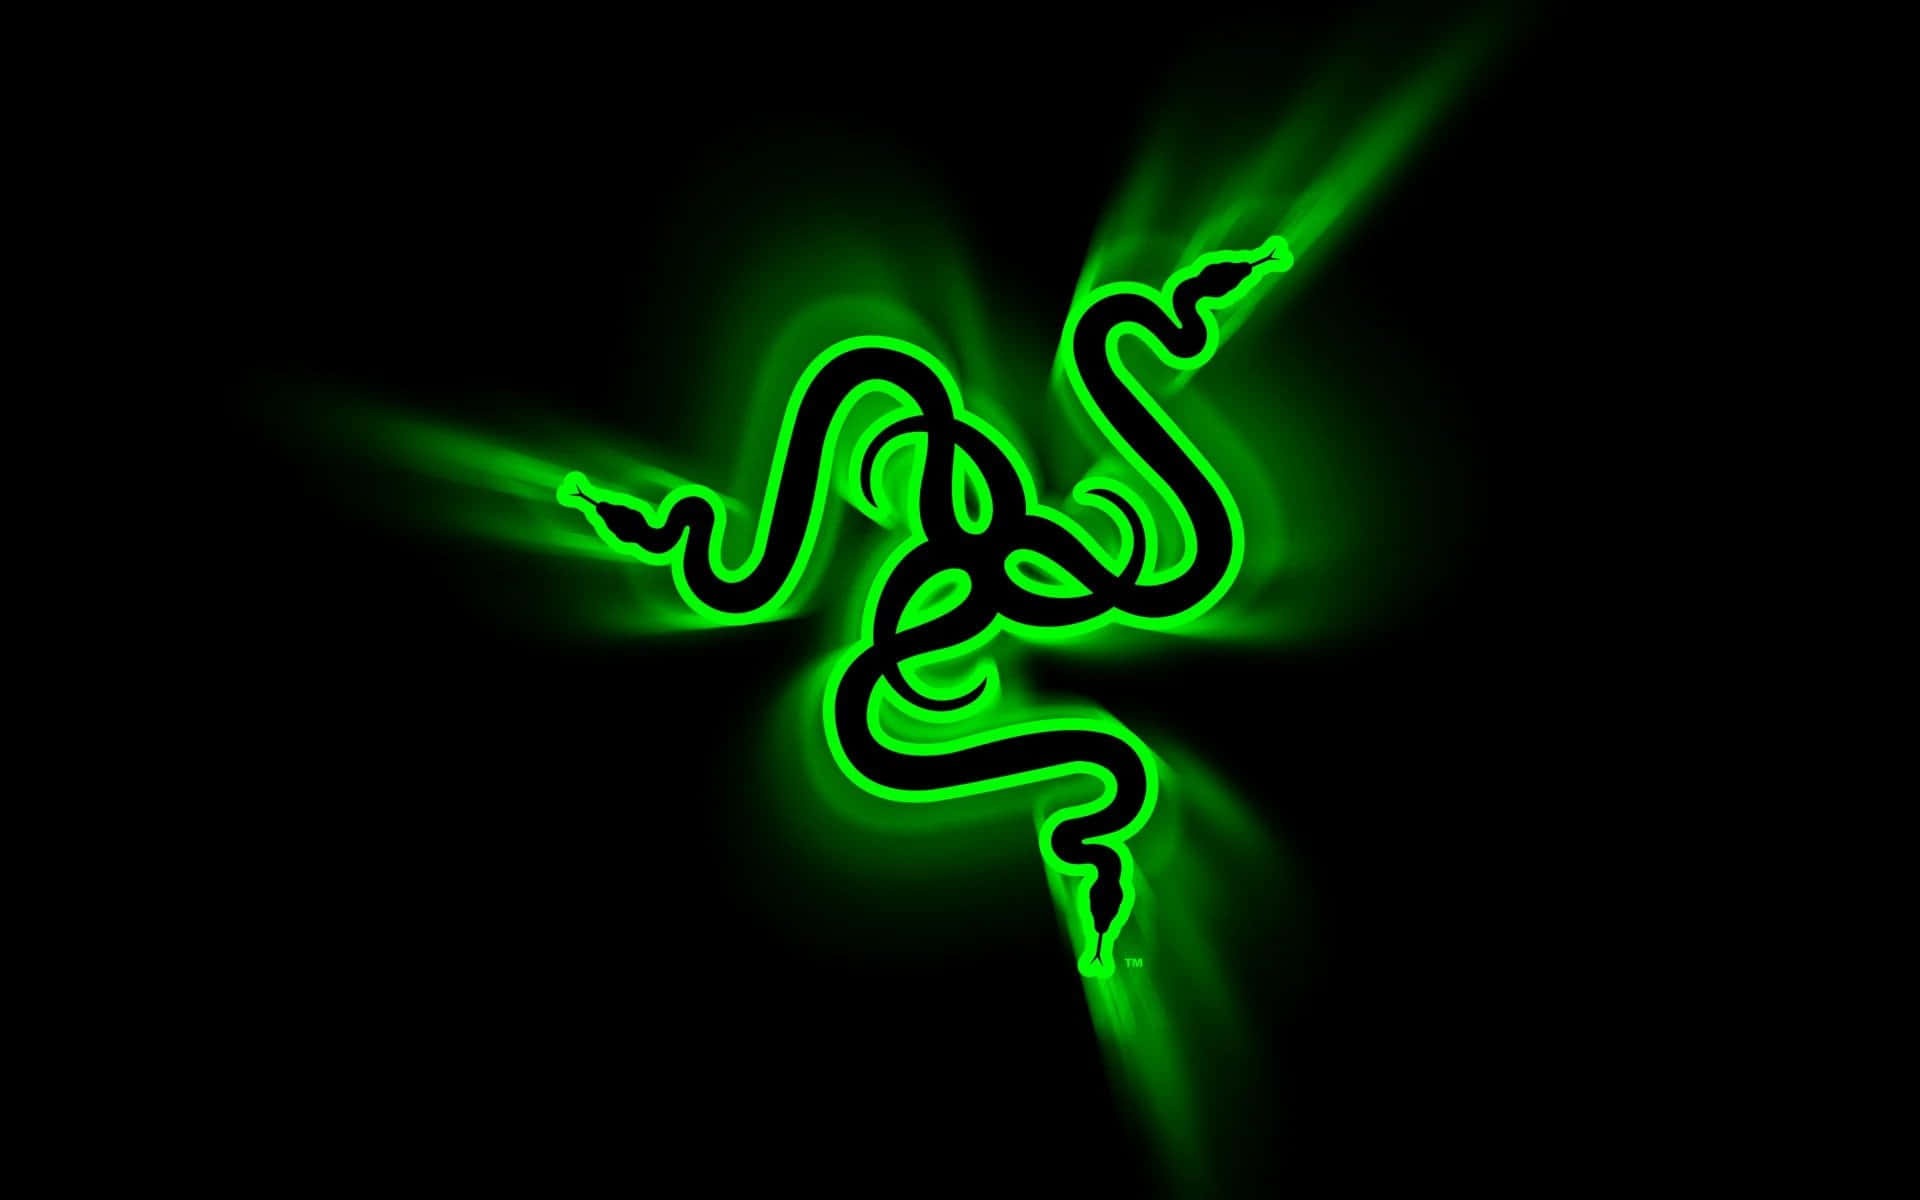 Razer Logo On A Black Background